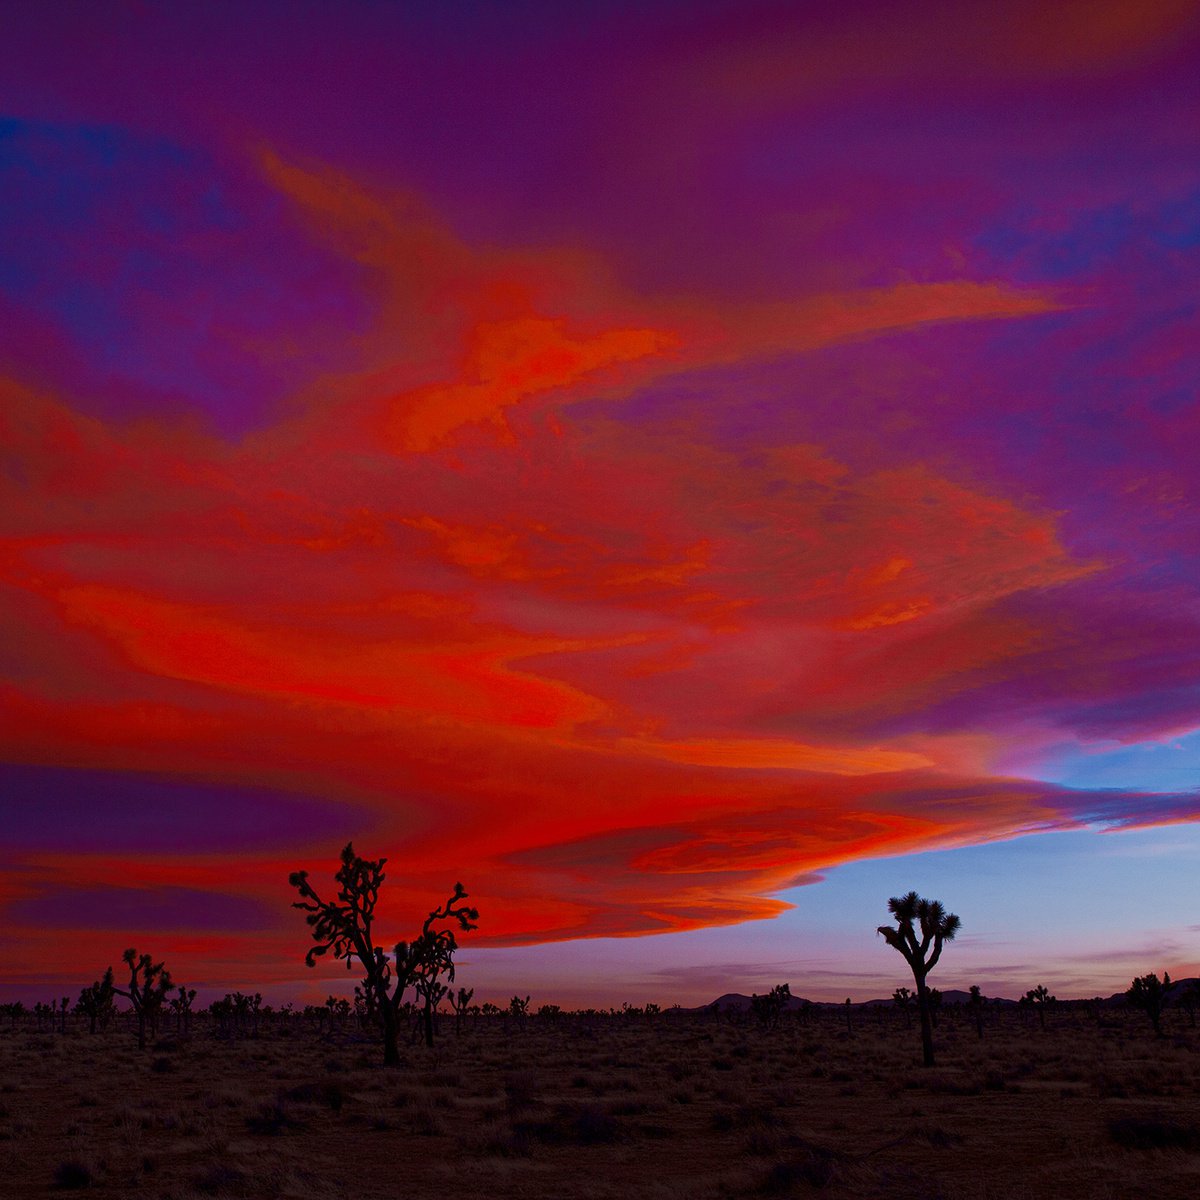 Mojave Sunset, Joshua Tree by Heike Bohnstengel